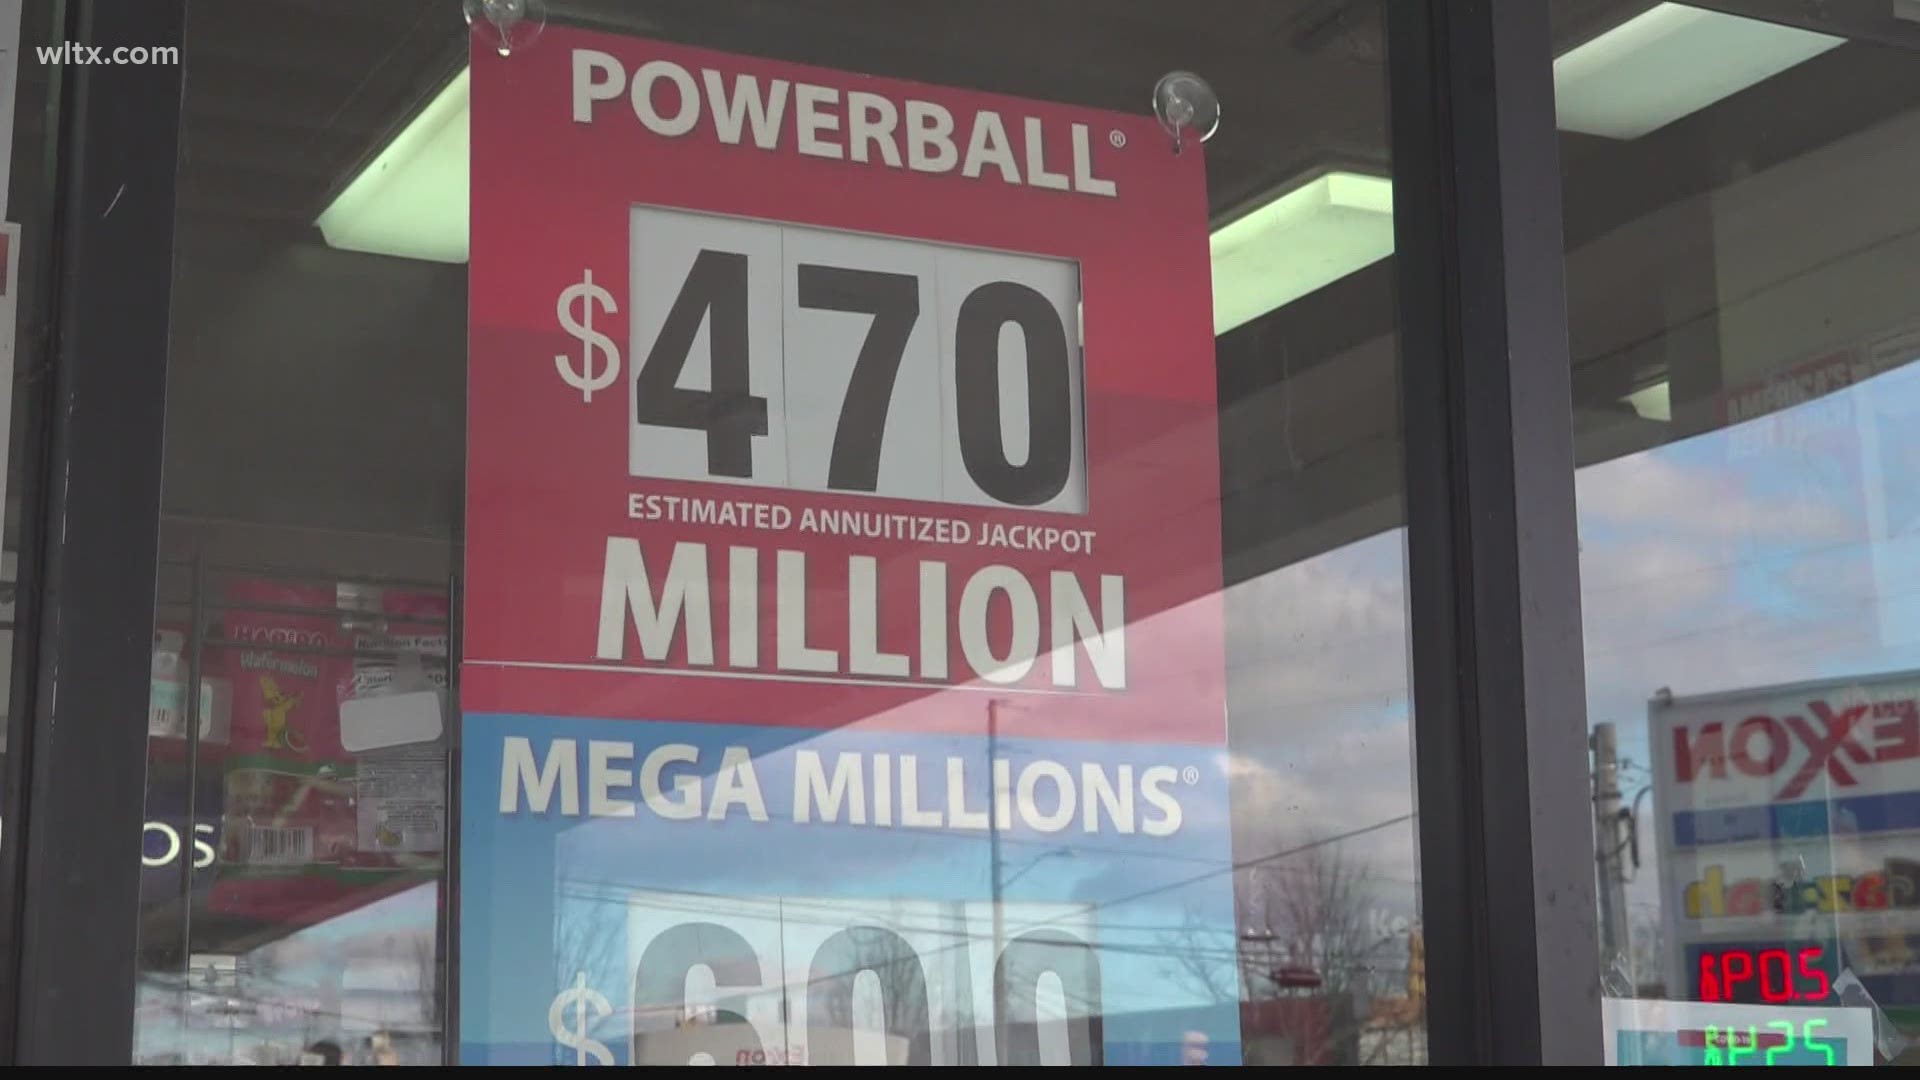 Saturday's Powerball jackpot was worth $470 million